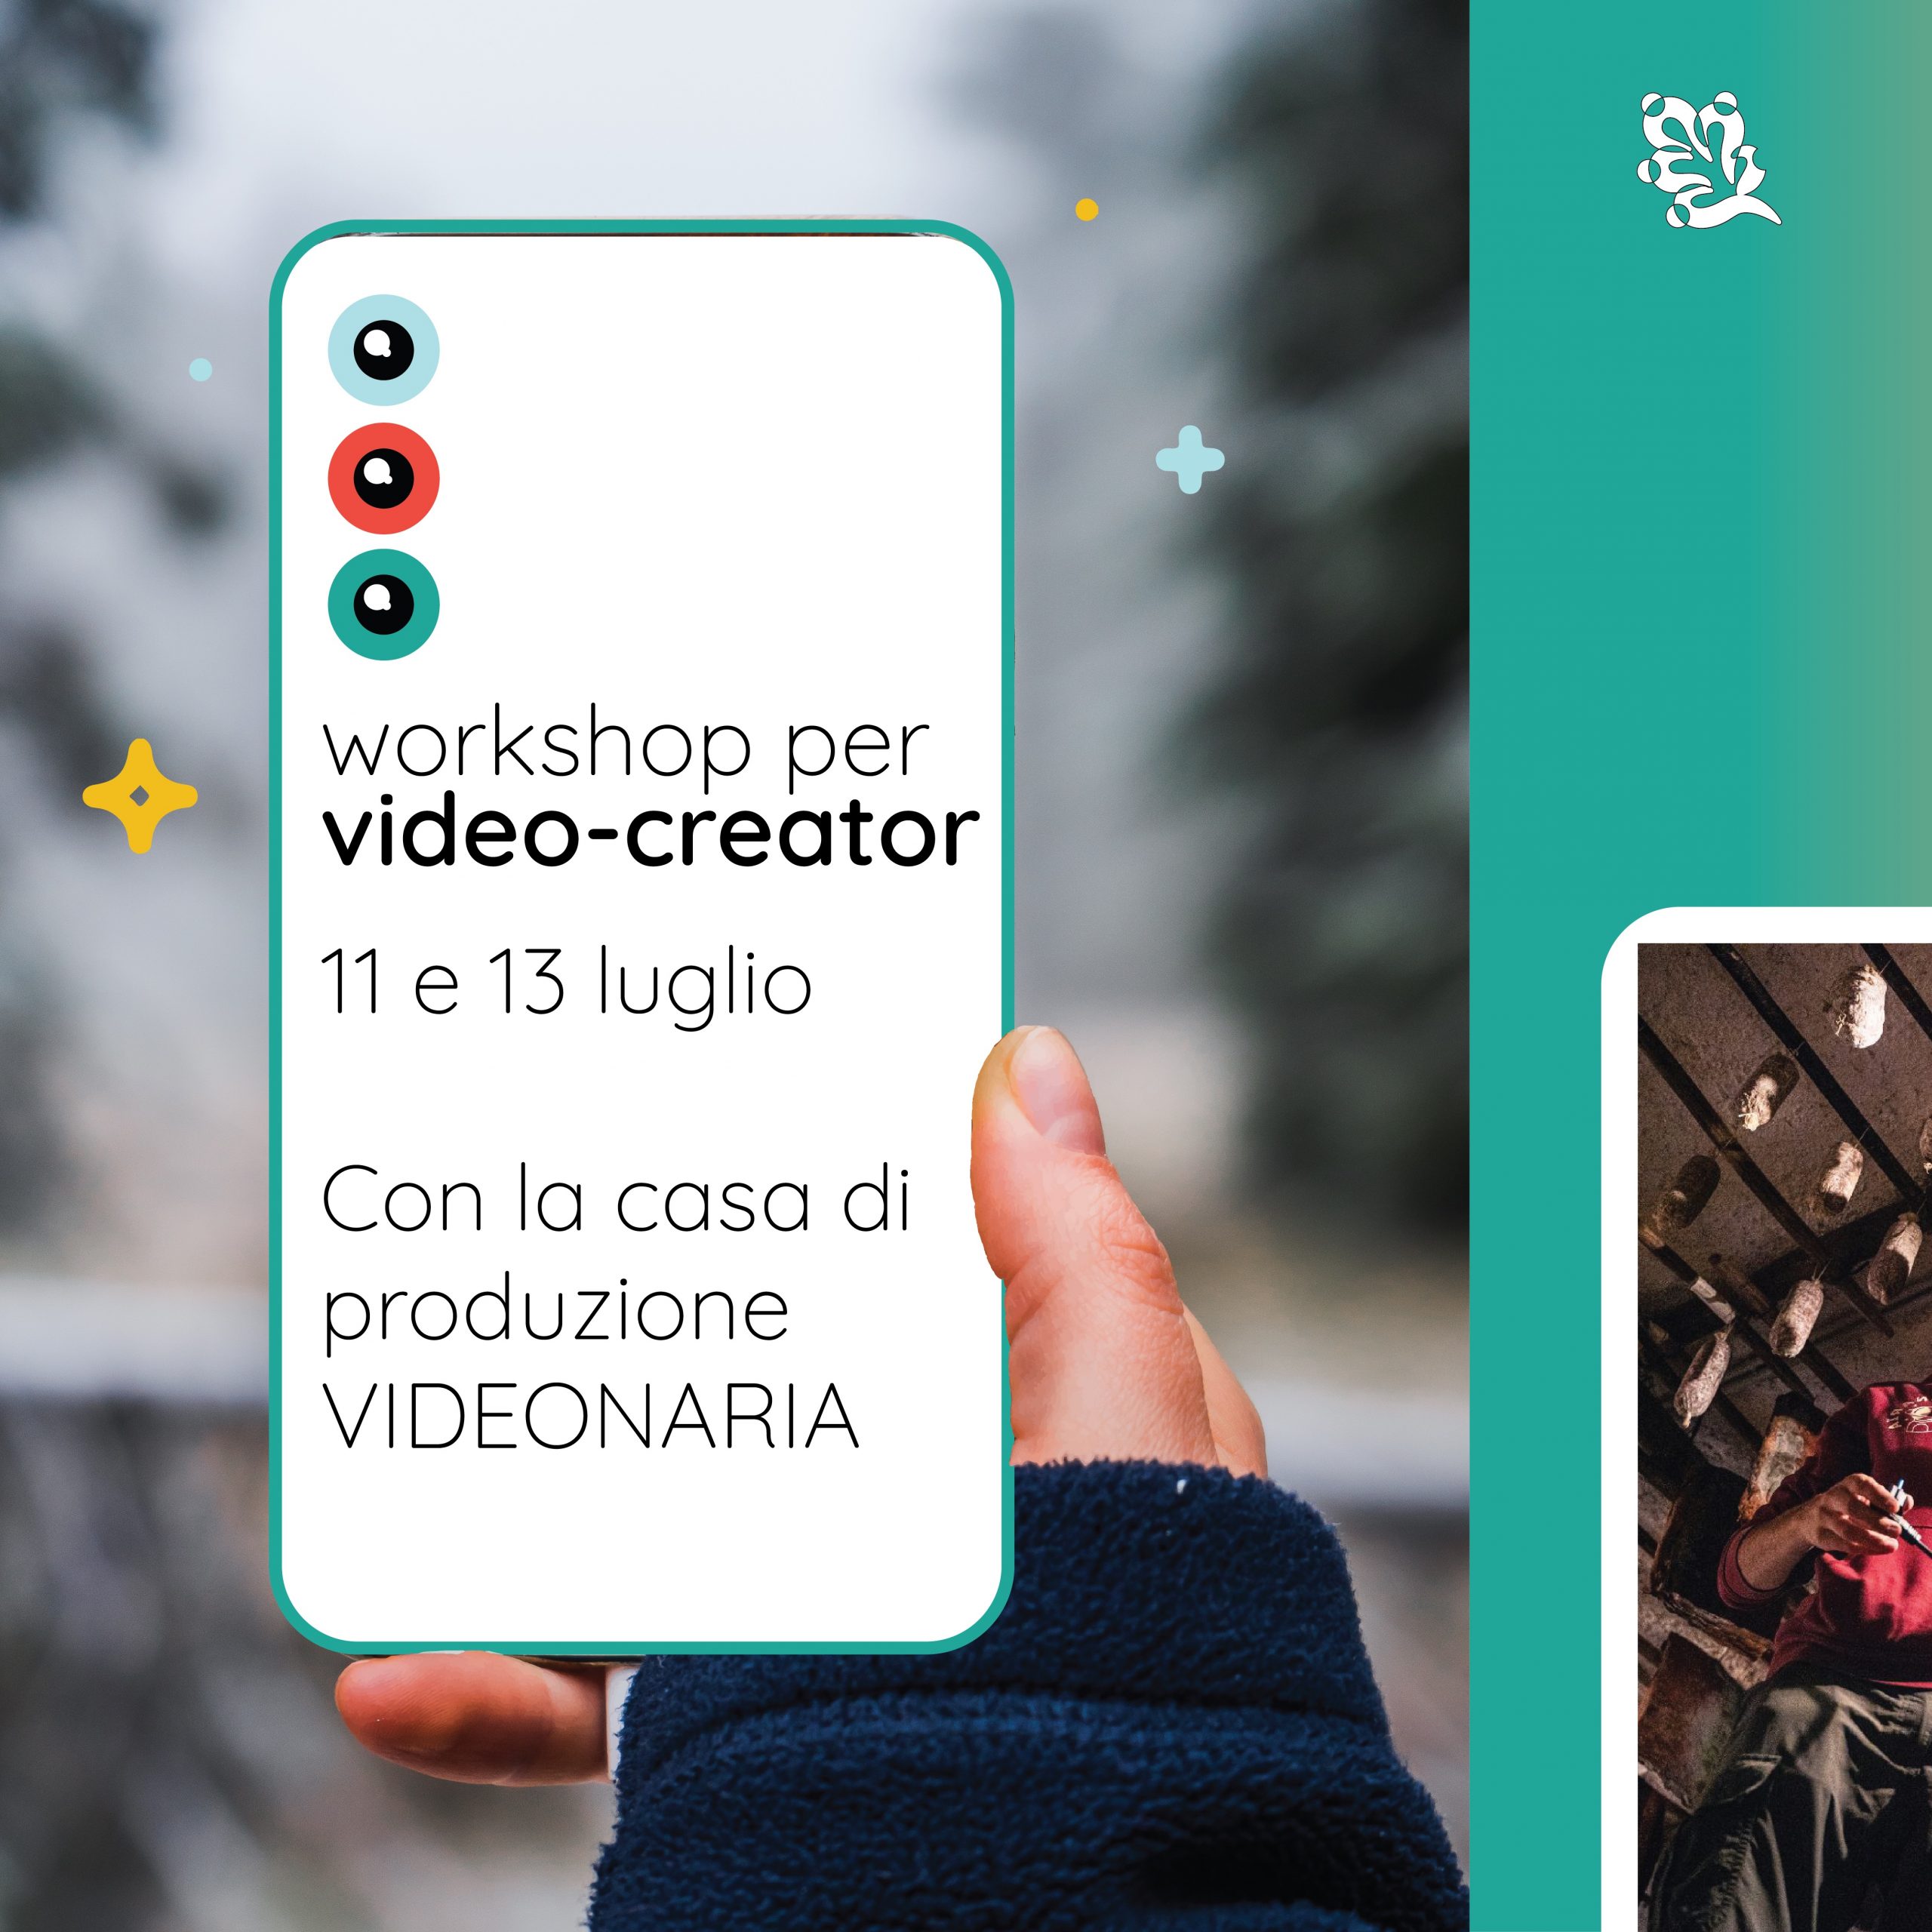 Workshop per video-creator